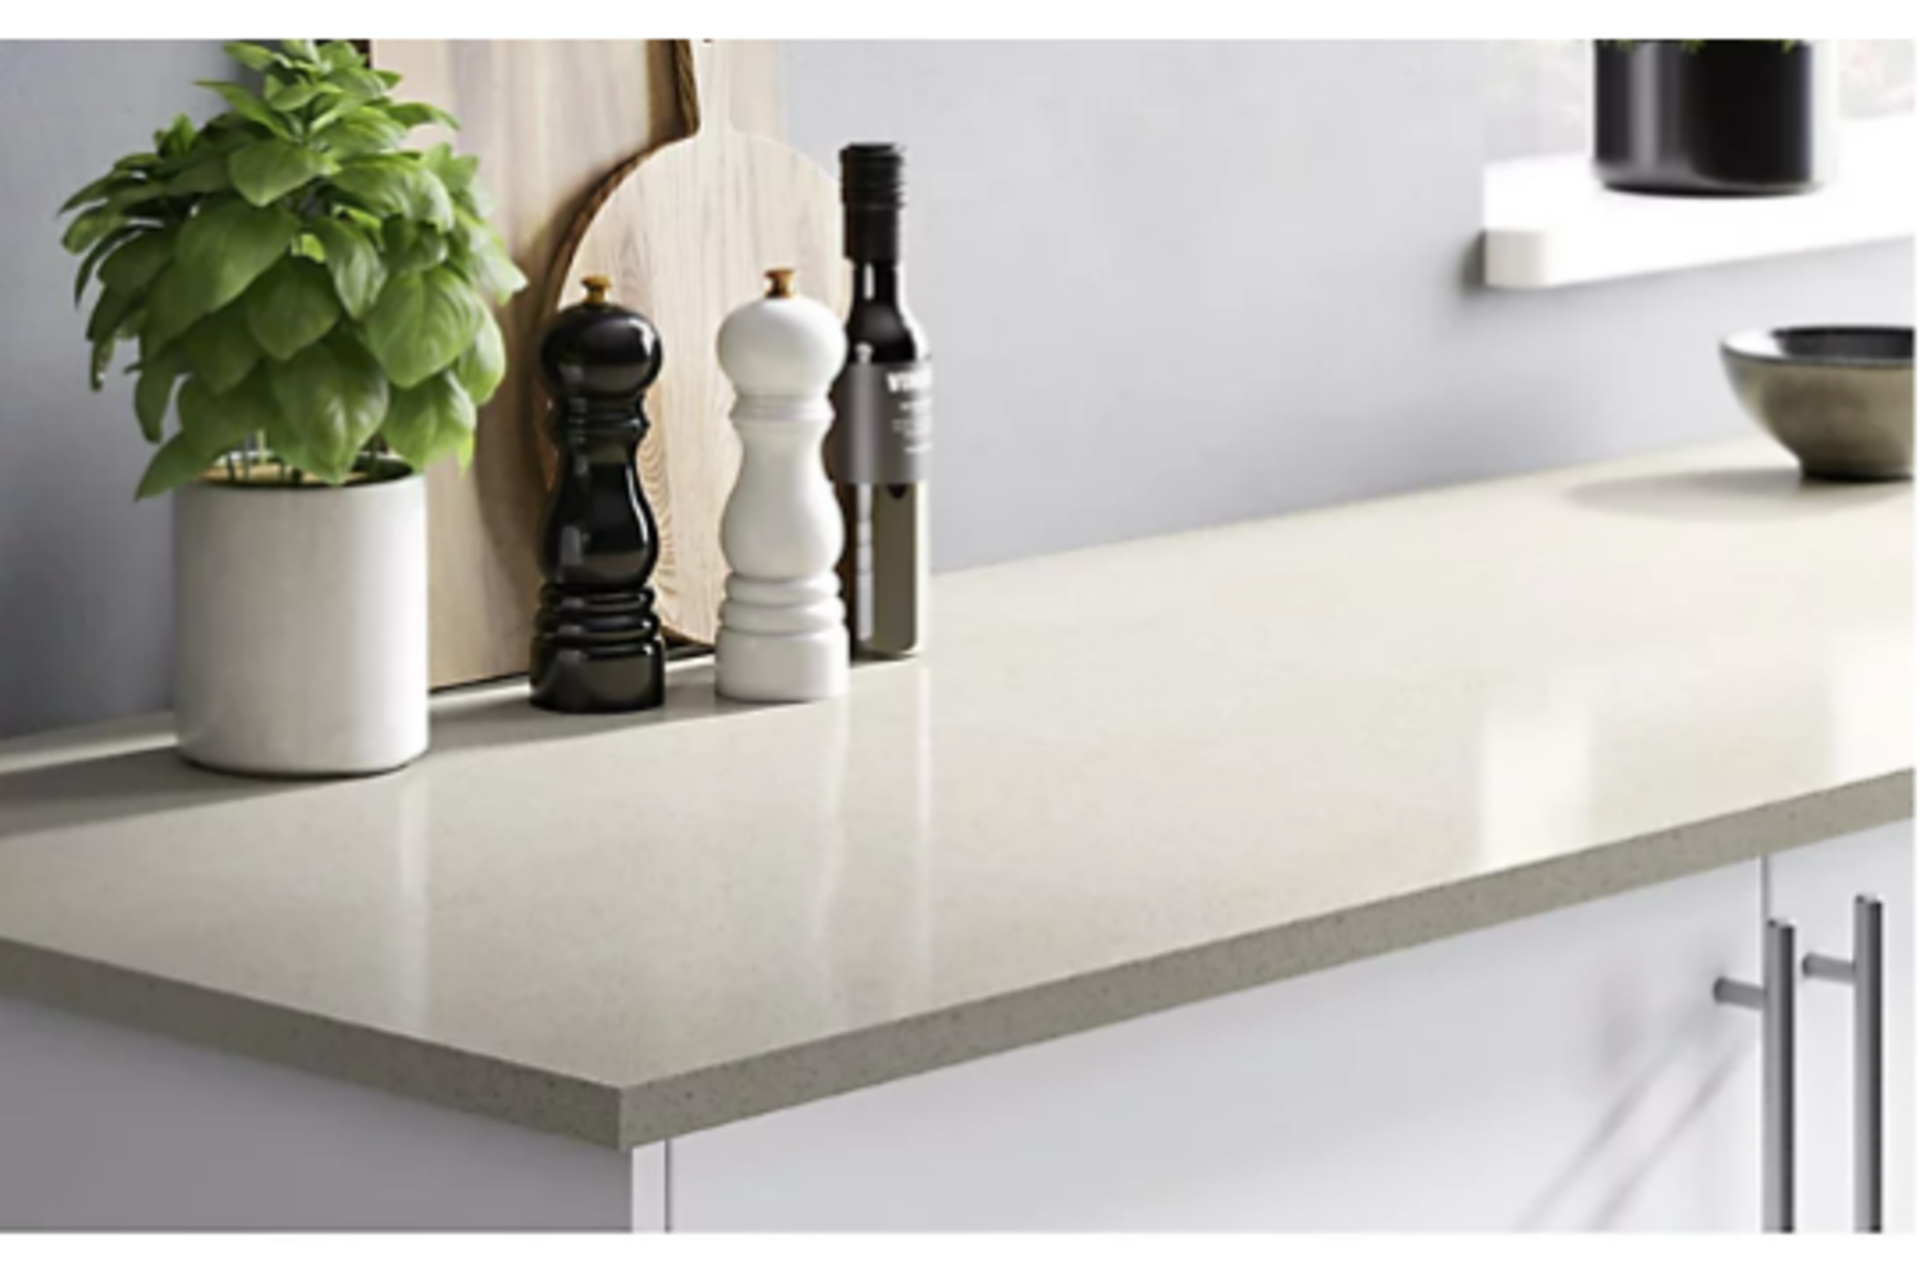 3 X New Packaged HI-MACS 20mm Matt Sand beige Stone effect Acrylic Square edge Kitchen Worktop. - Image 4 of 4